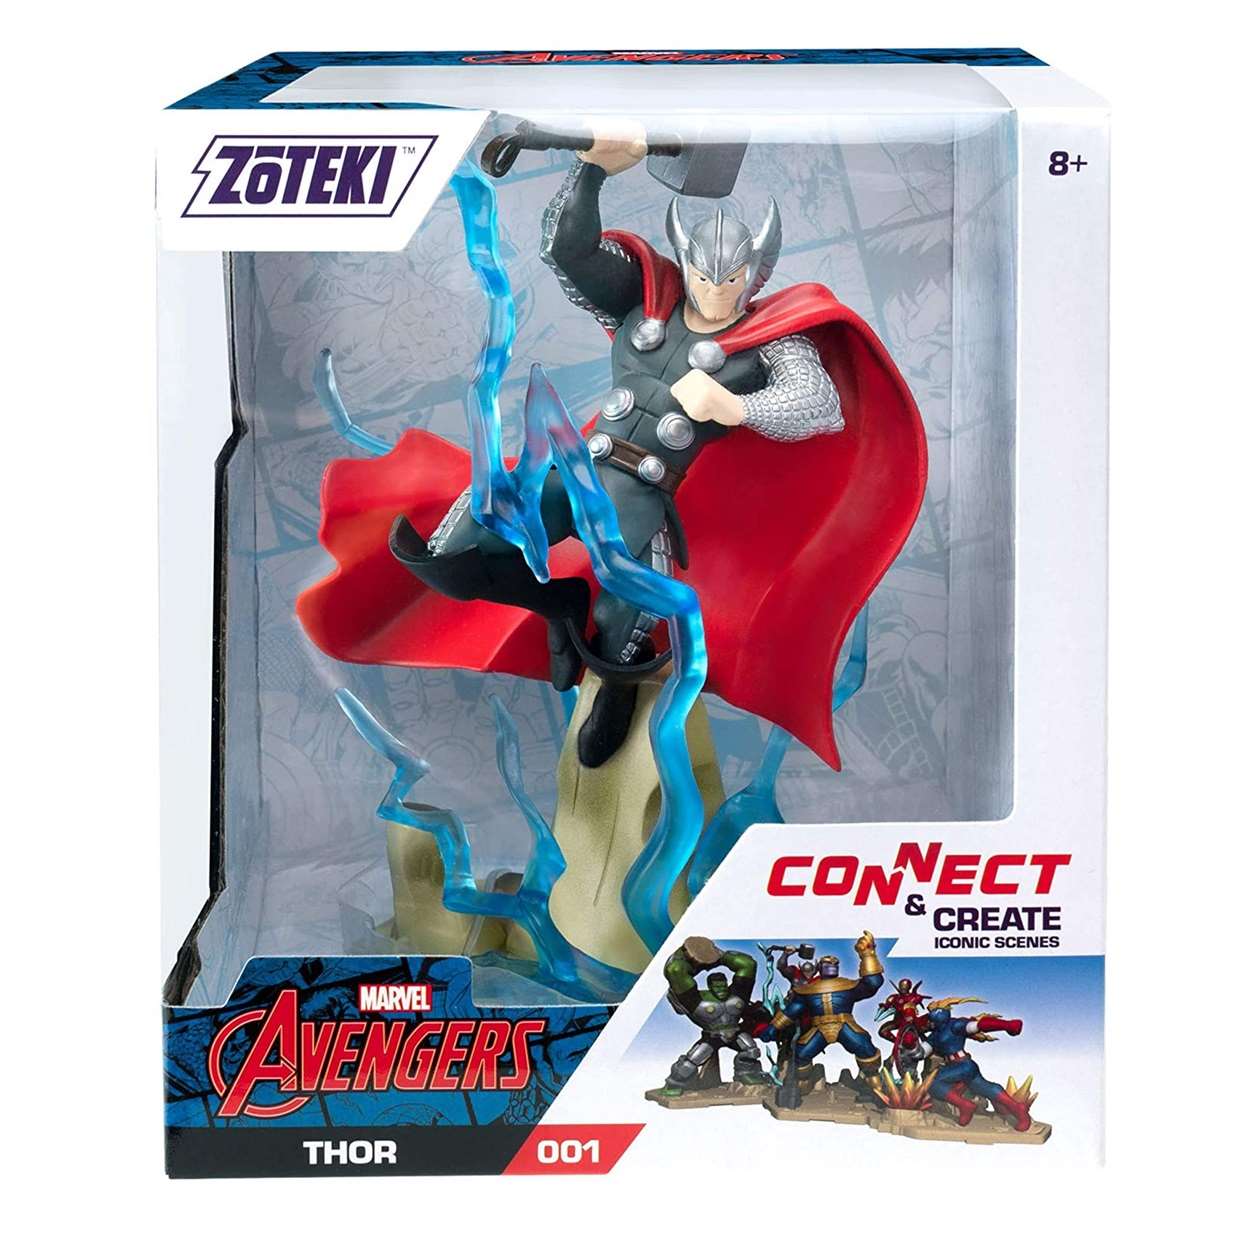 Thor #001 Figura Marvel Avengers Zoteki 4 Pulgadas